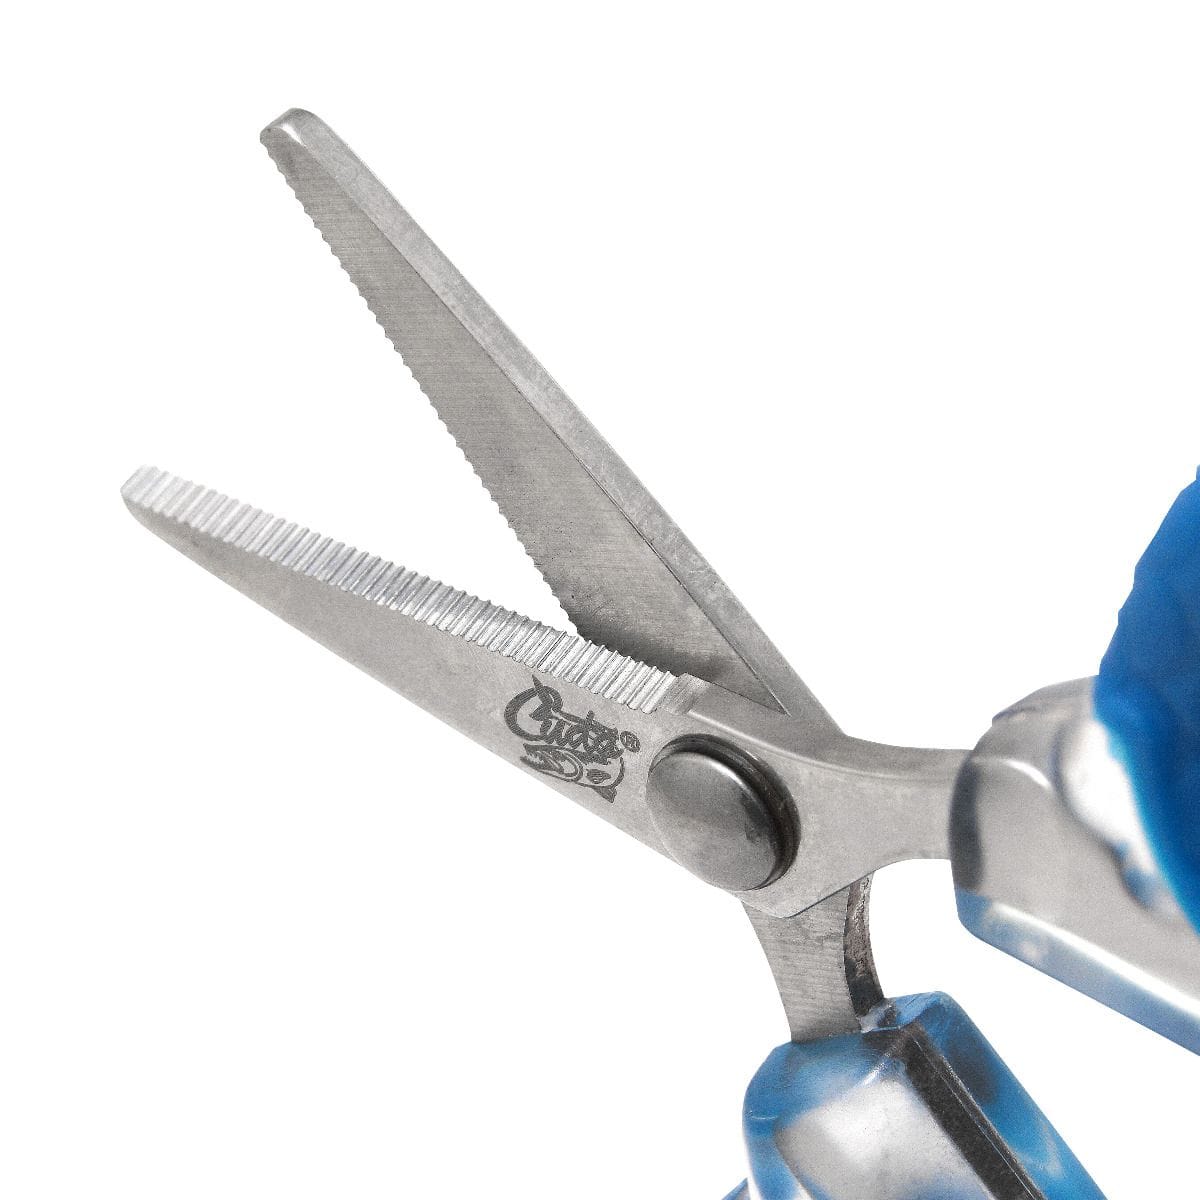 Plaztek Cuda micro 3" braid scissor open showing the serrated blades.